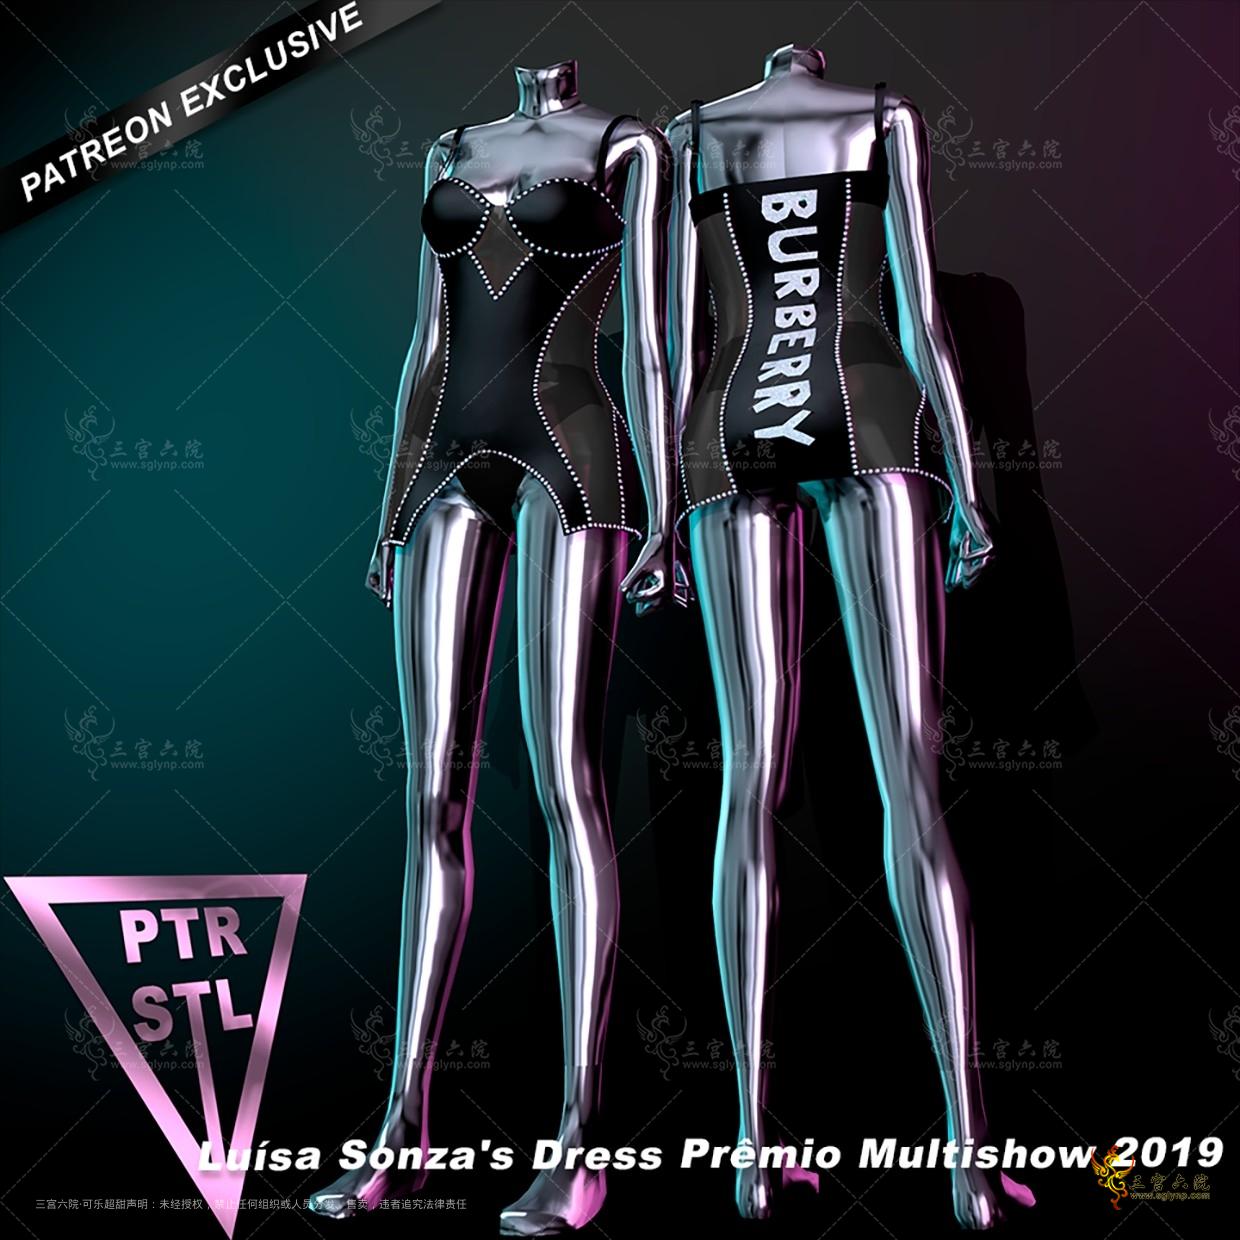 Pietro's Style Lua Sonza's Dress Pr坢io Multishow 2019.png